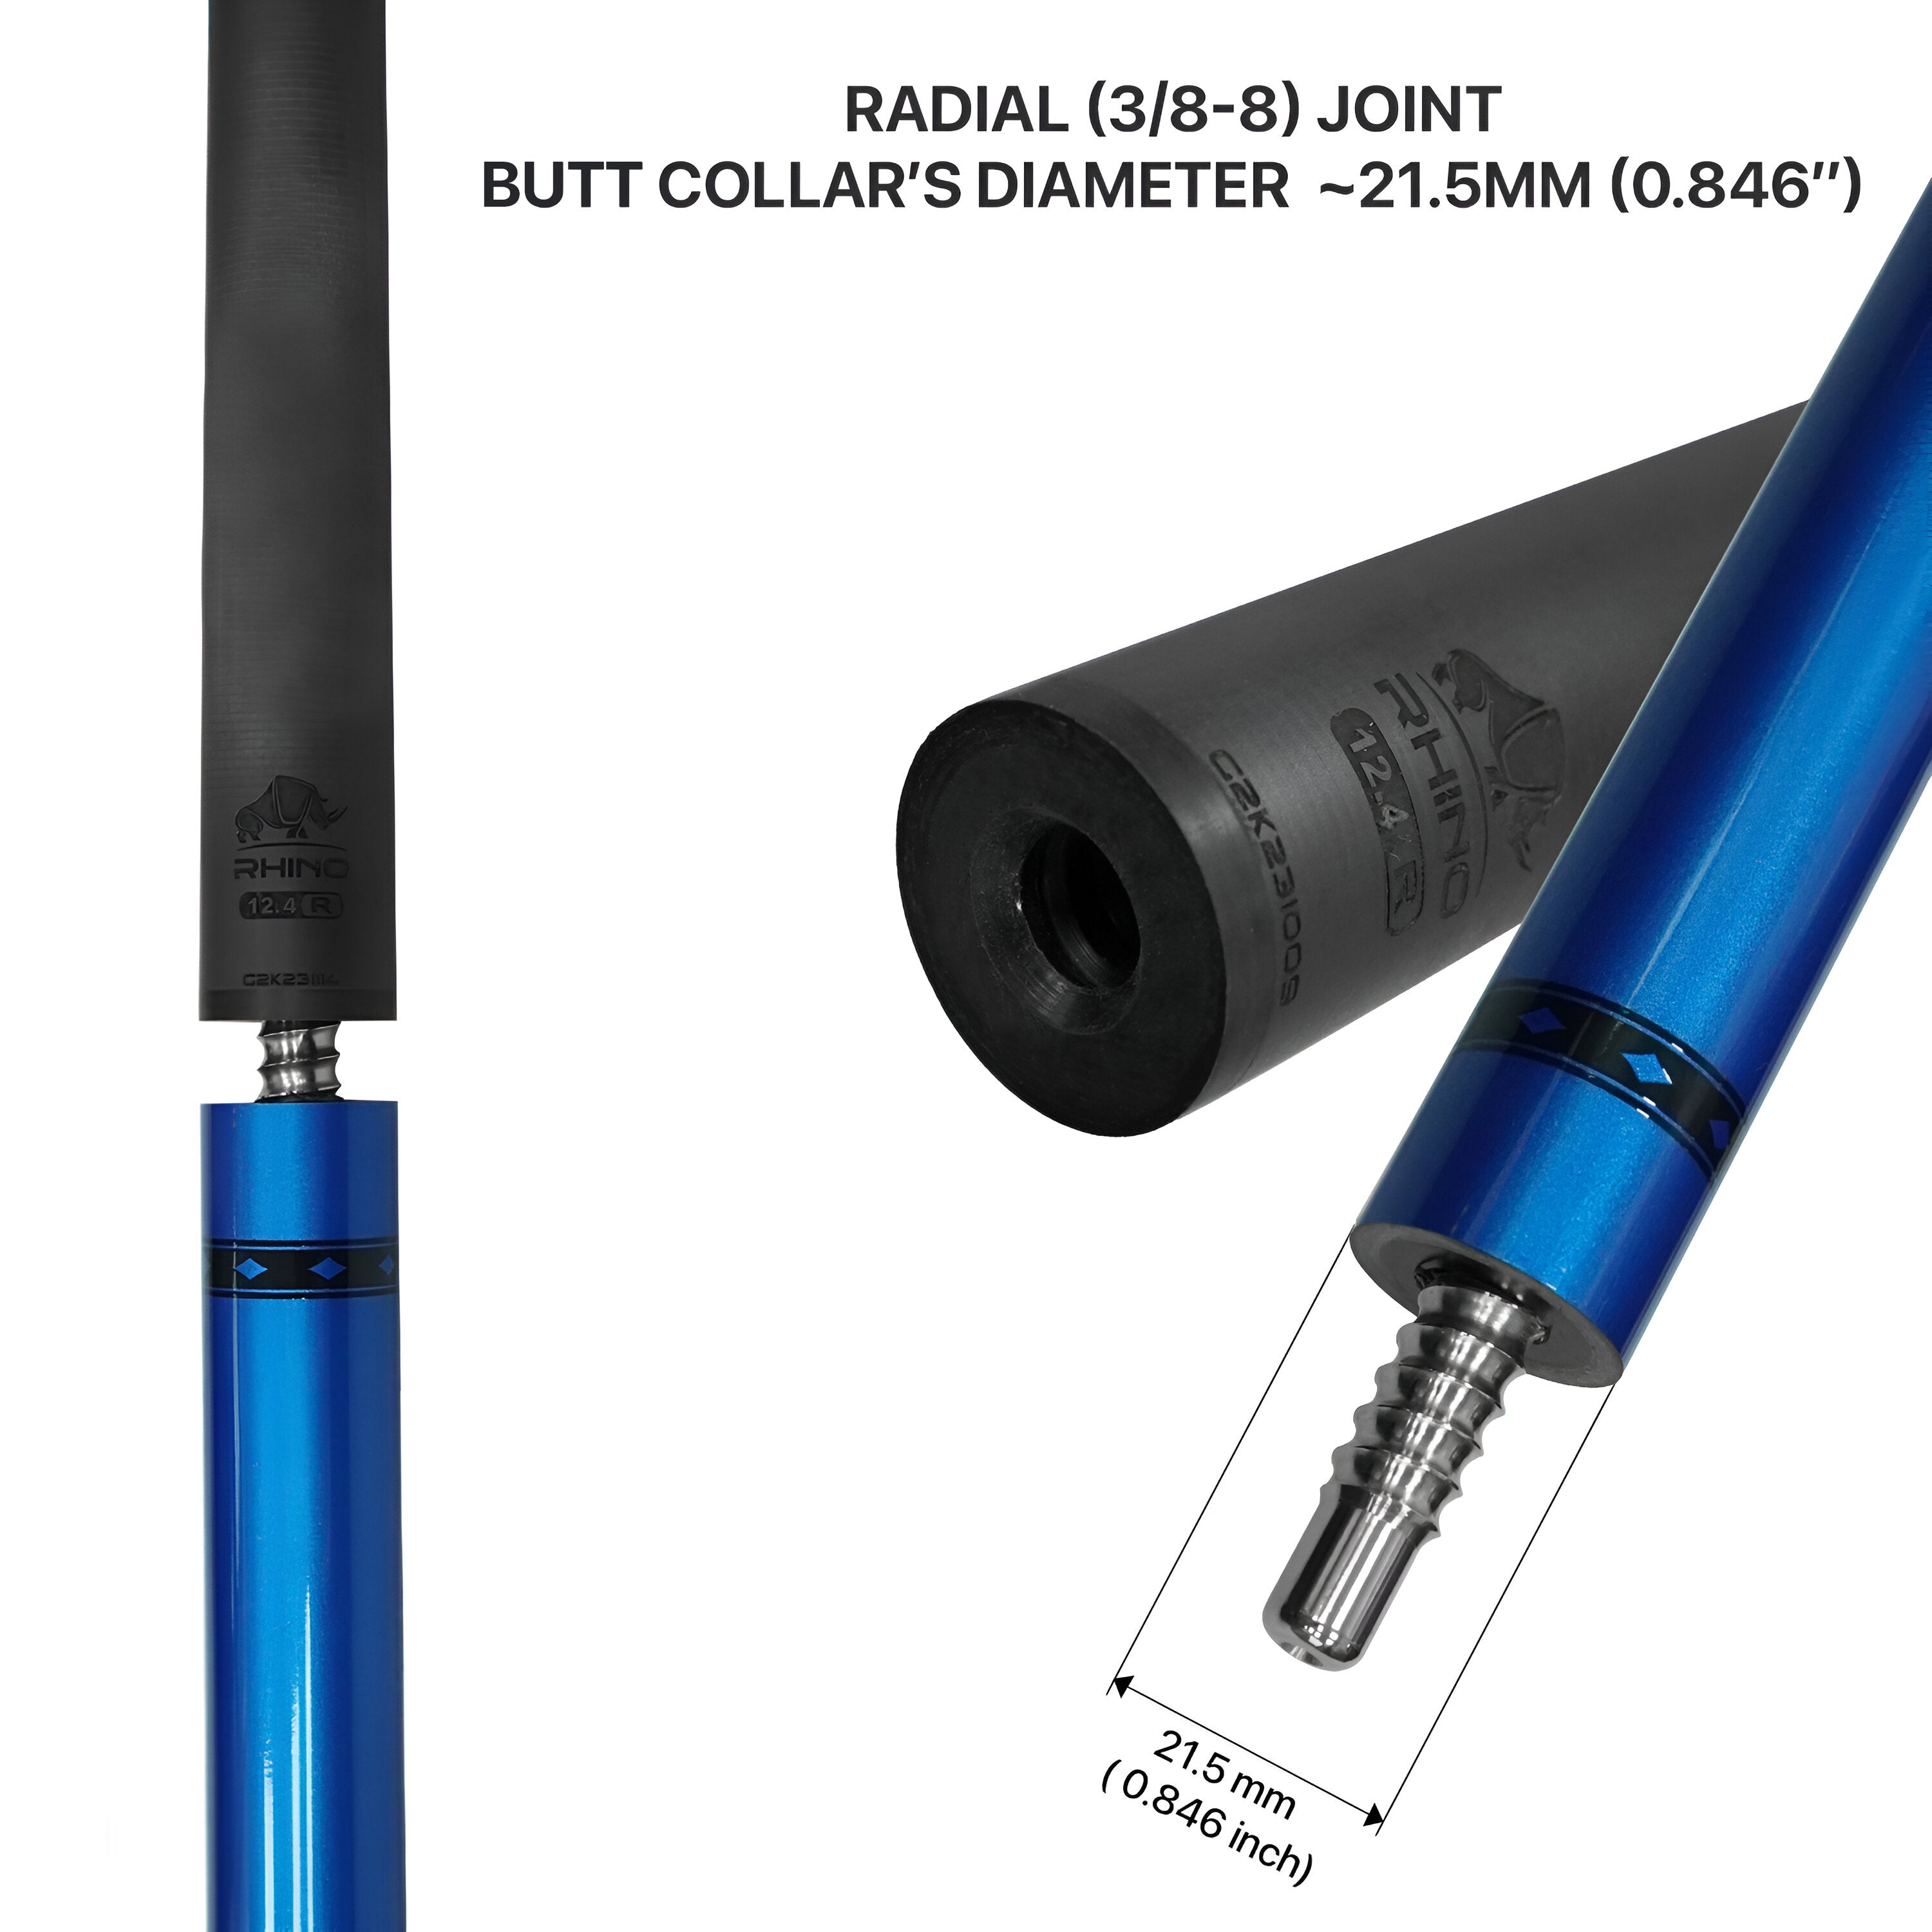 Rhino Nebula Pool Cue - Blue (Radial Joint) - 12.4 mm Tip Diameter